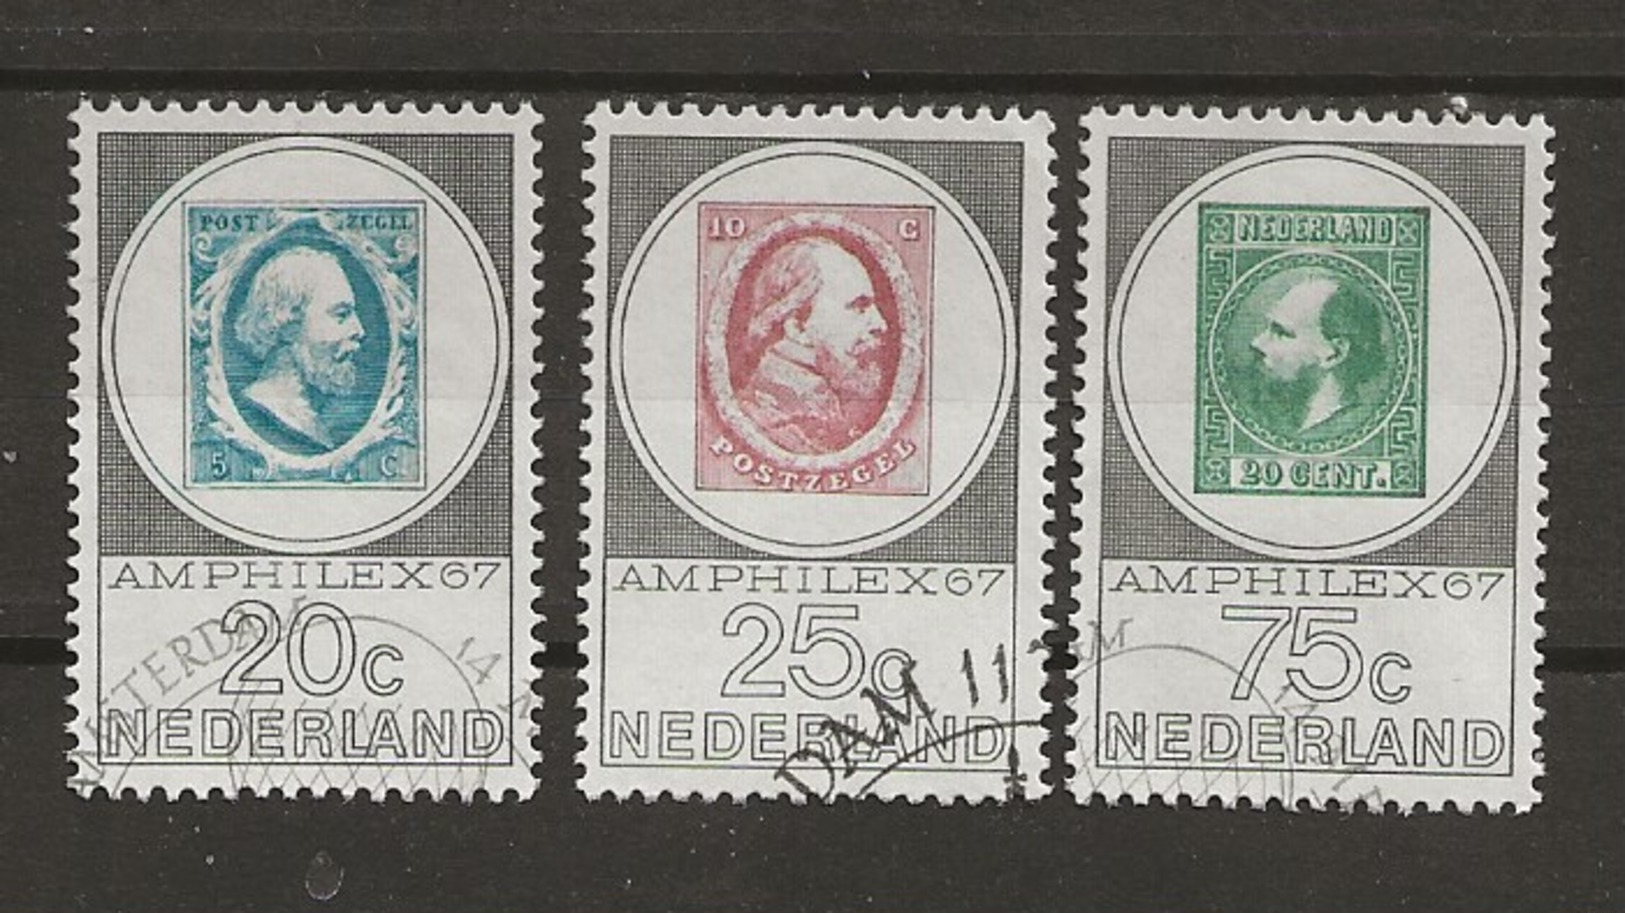 Amphilex 67. - Used Stamps